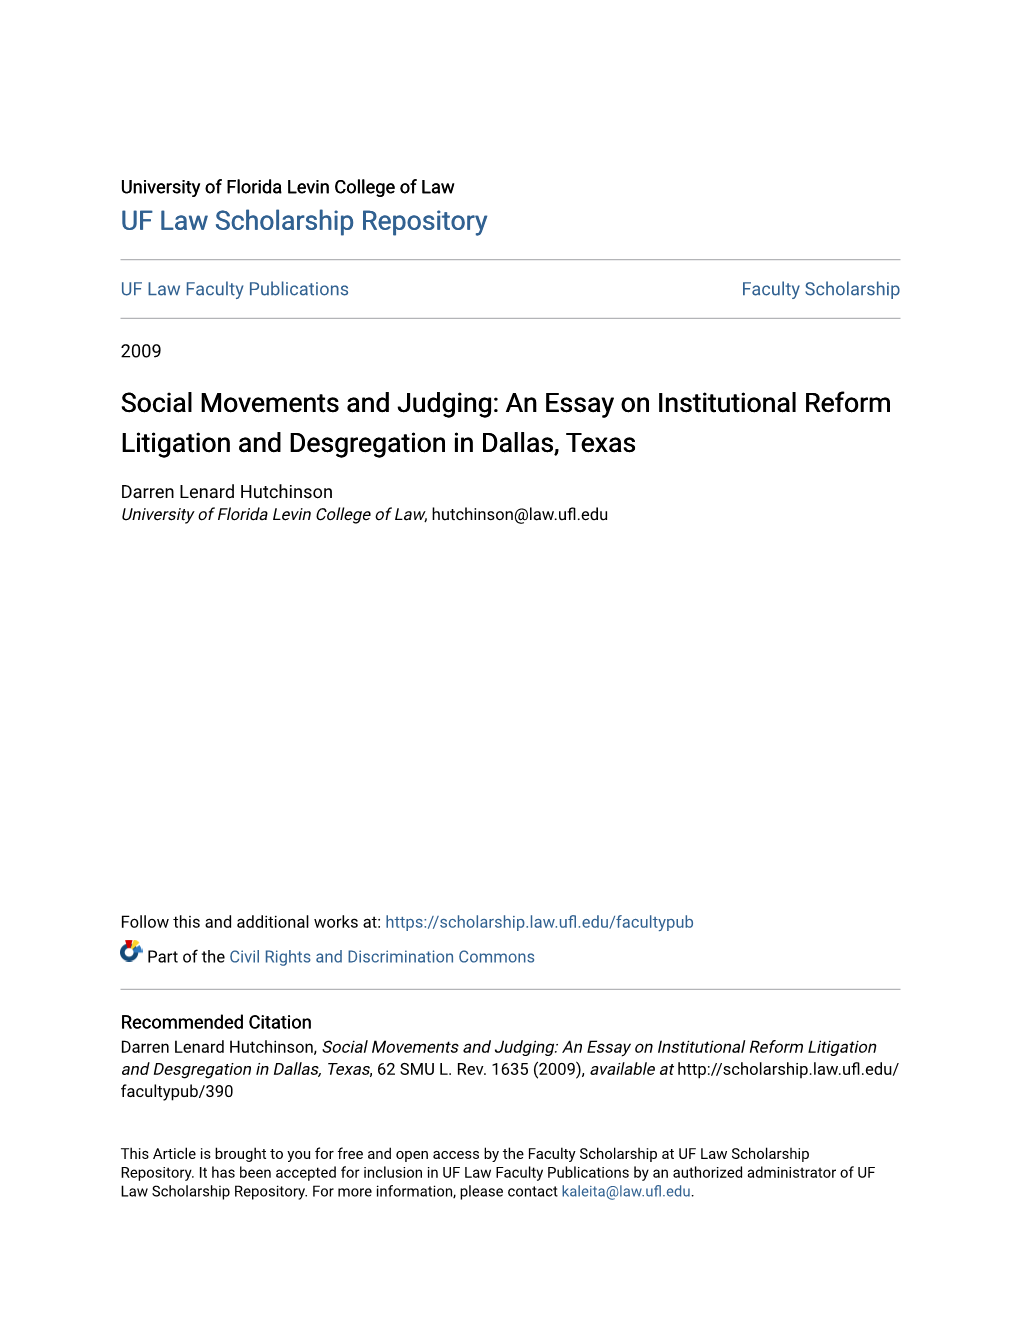 An Essay on Institutional Reform Litigation and Desgregation in Dallas, Texas